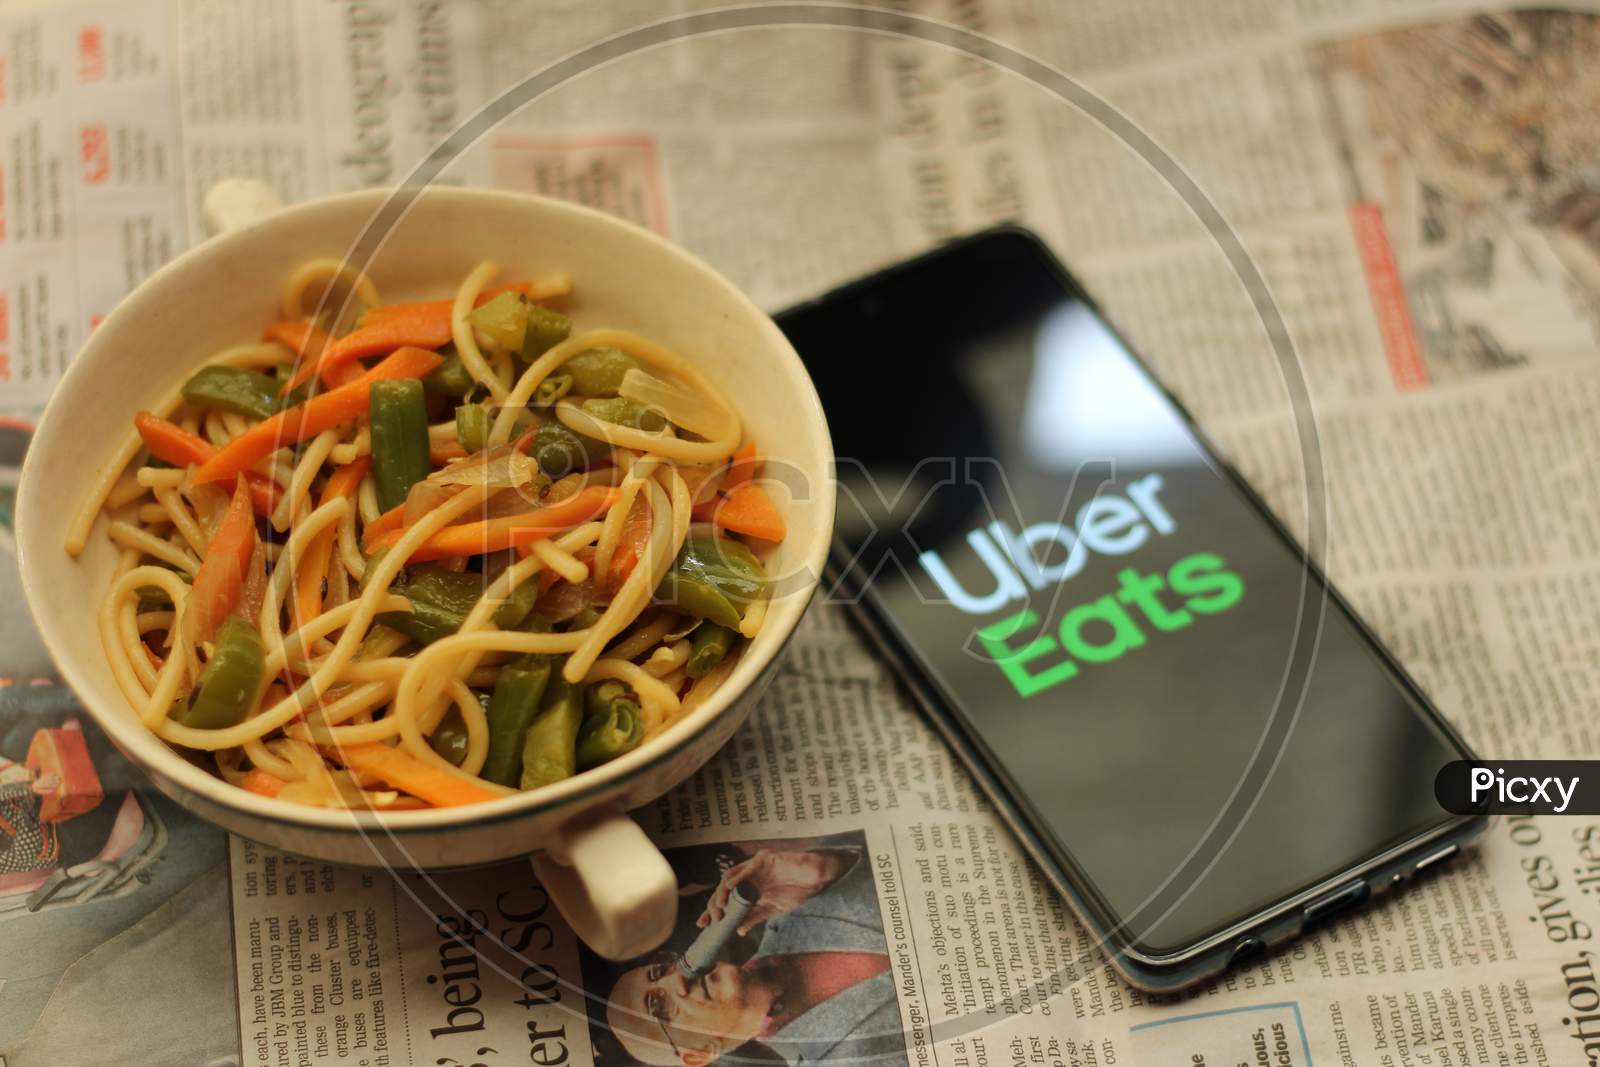 Uber eats application icon on smartphone.